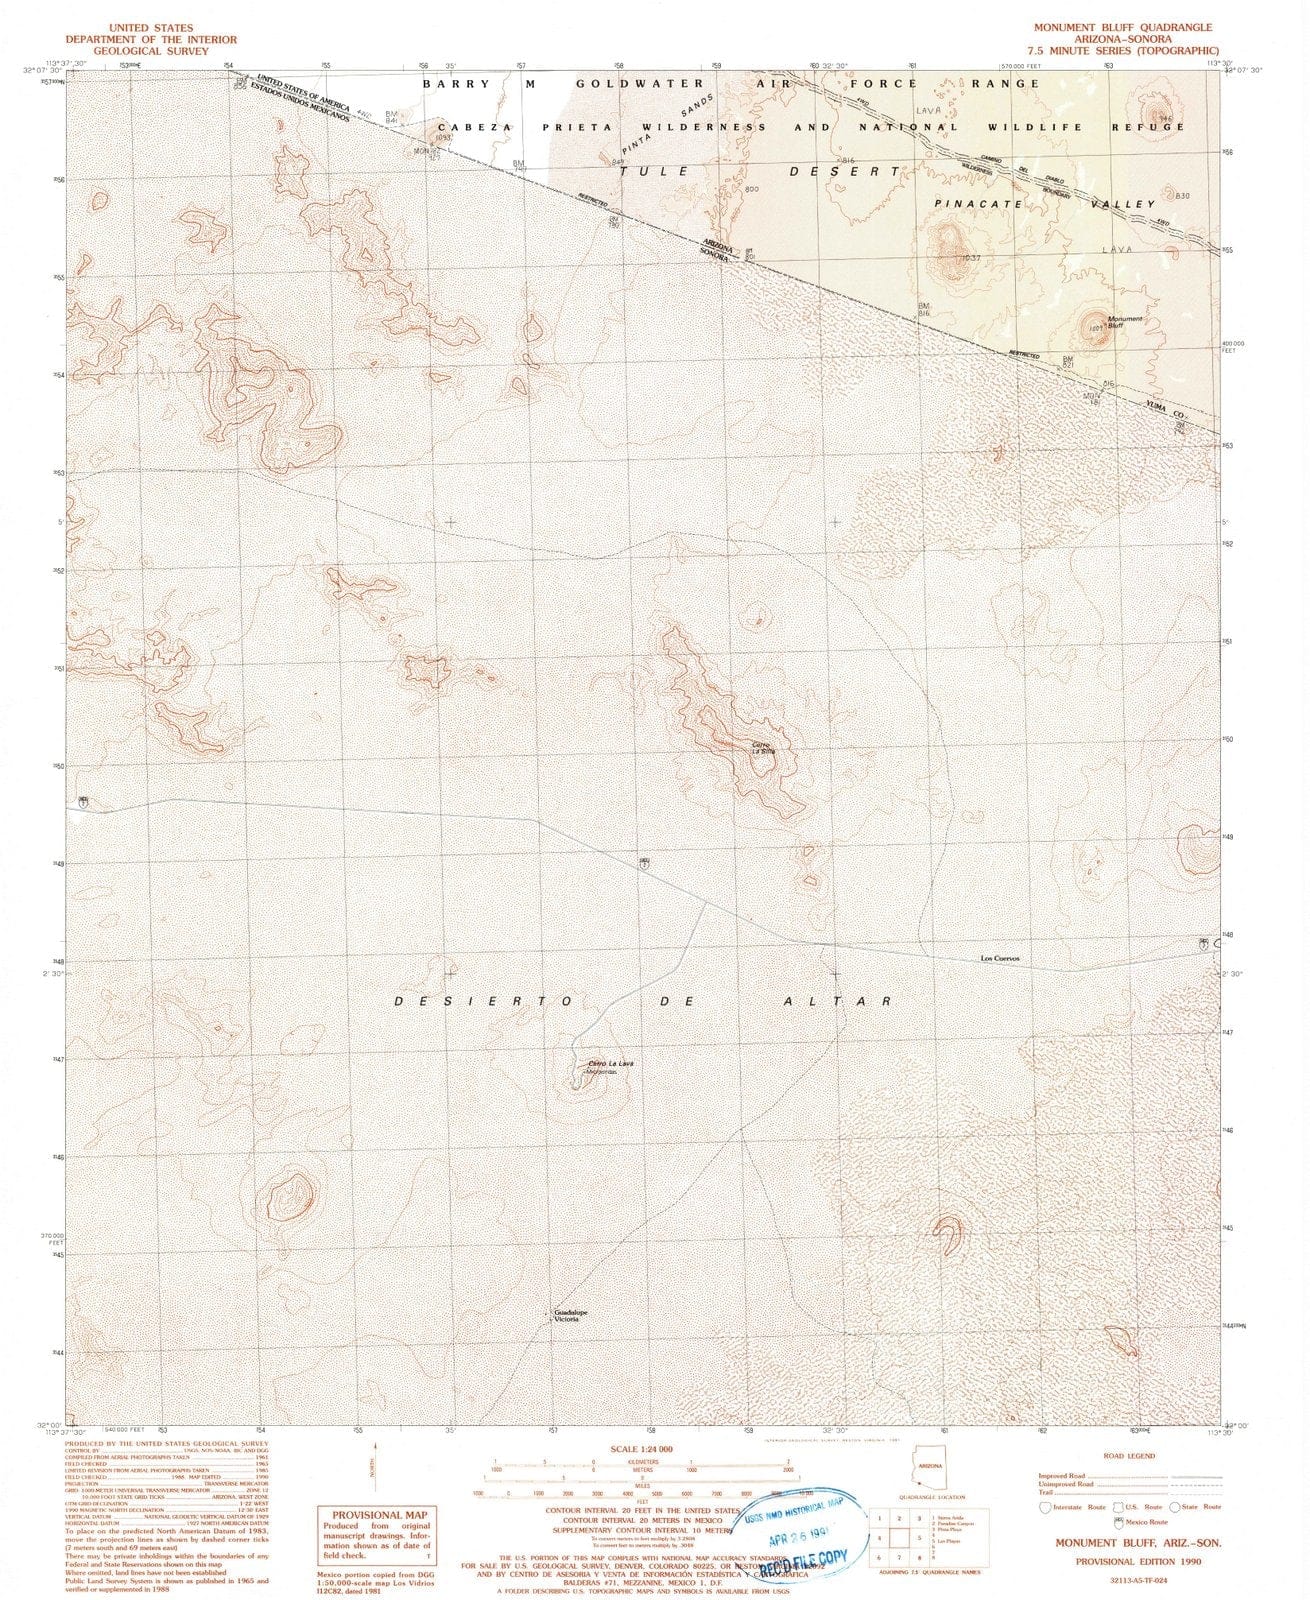 1990 Monument Bluff, AZ - Arizona - USGS Topographic Map